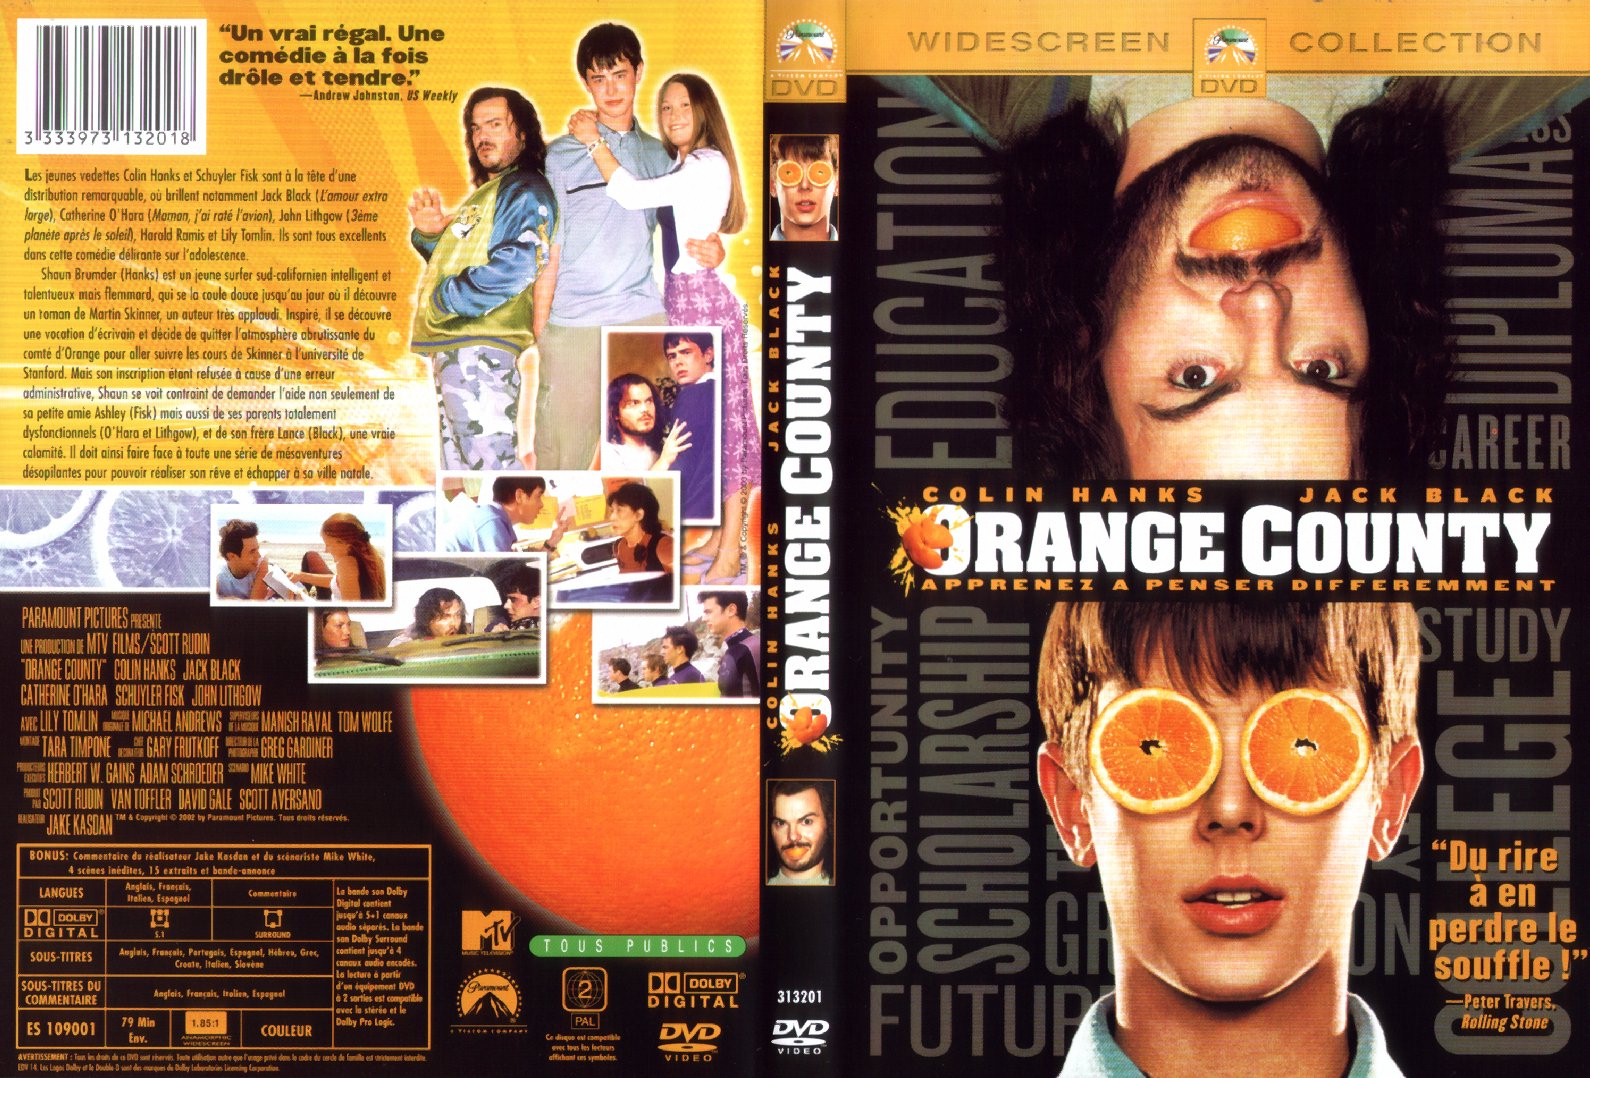 Jaquette DVD Orange county